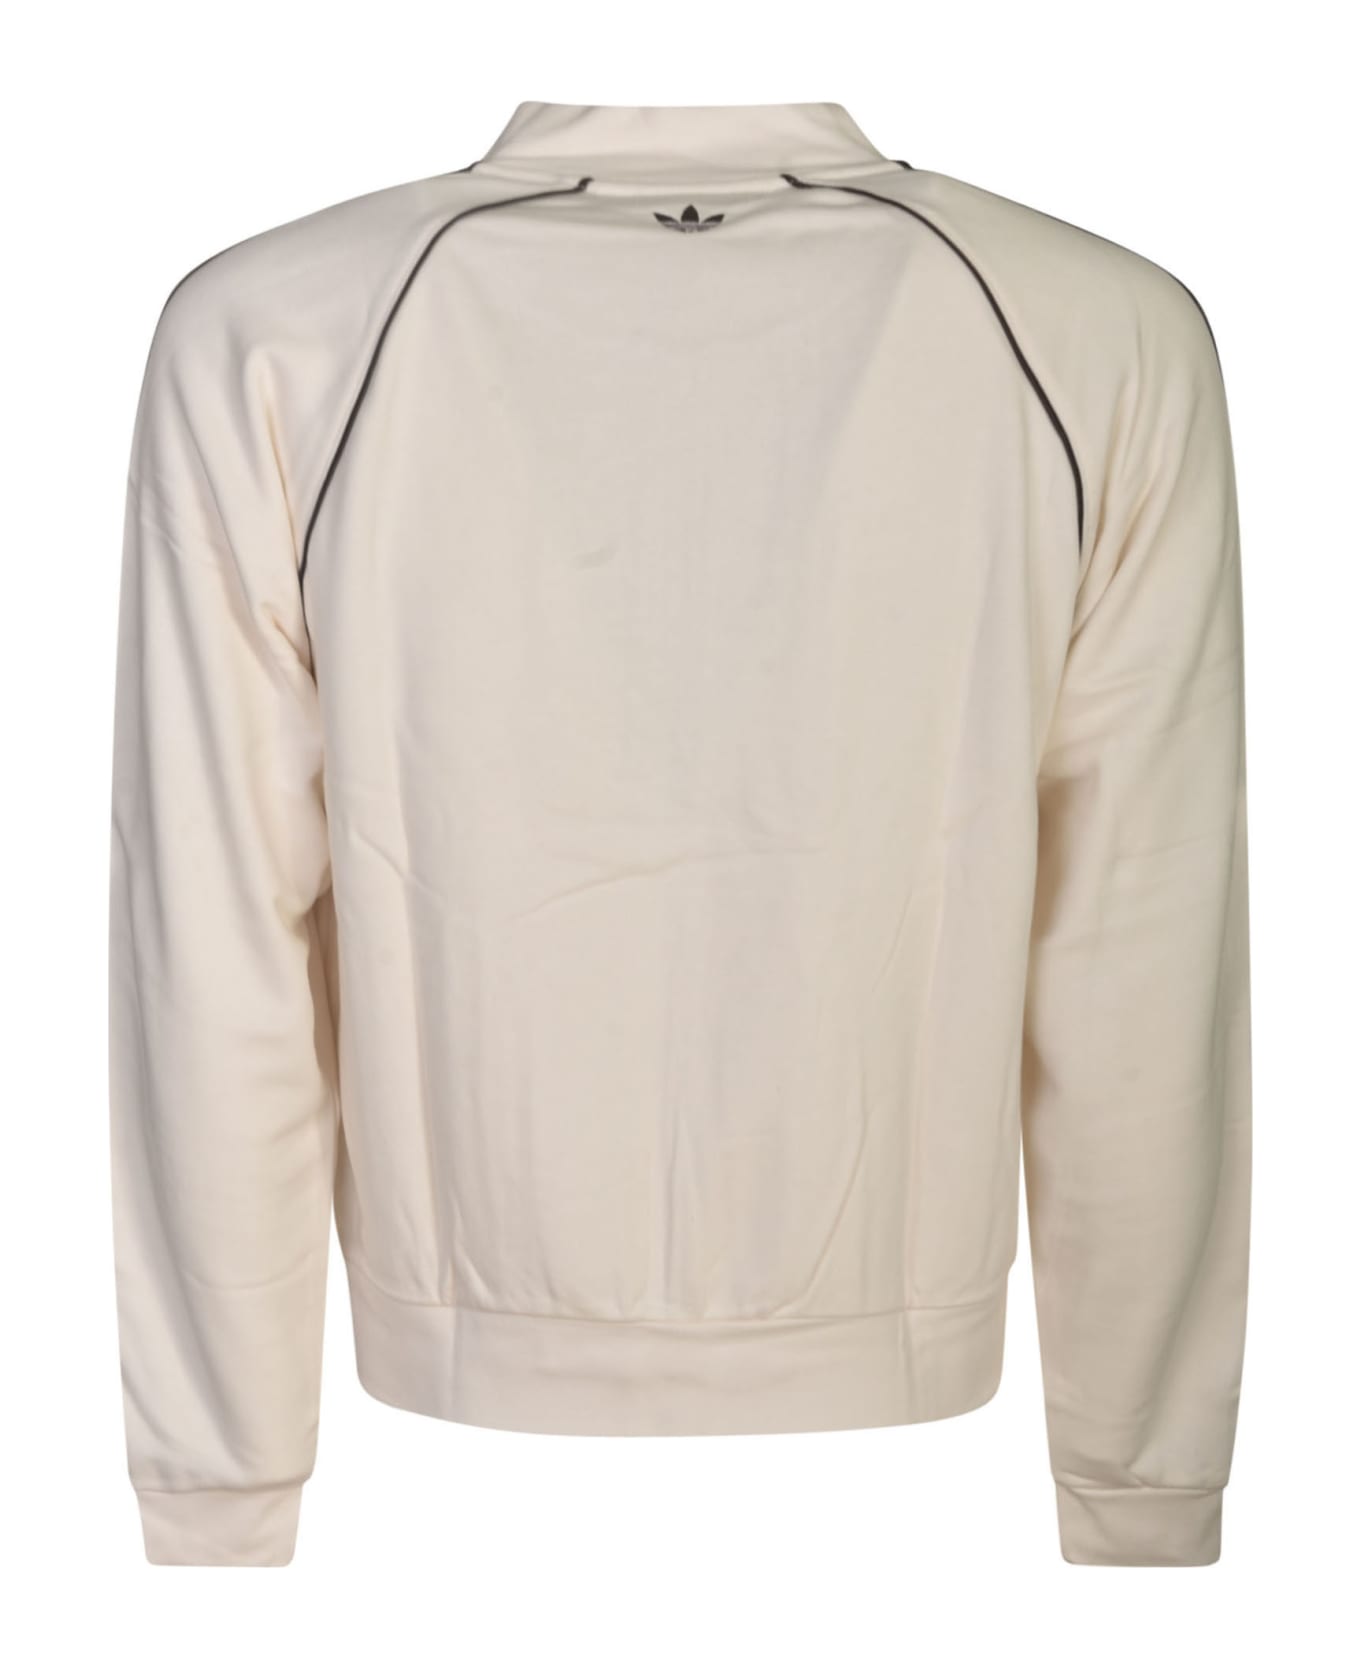 Adidas Originals by Wales Bonner Stripe Jacket - White